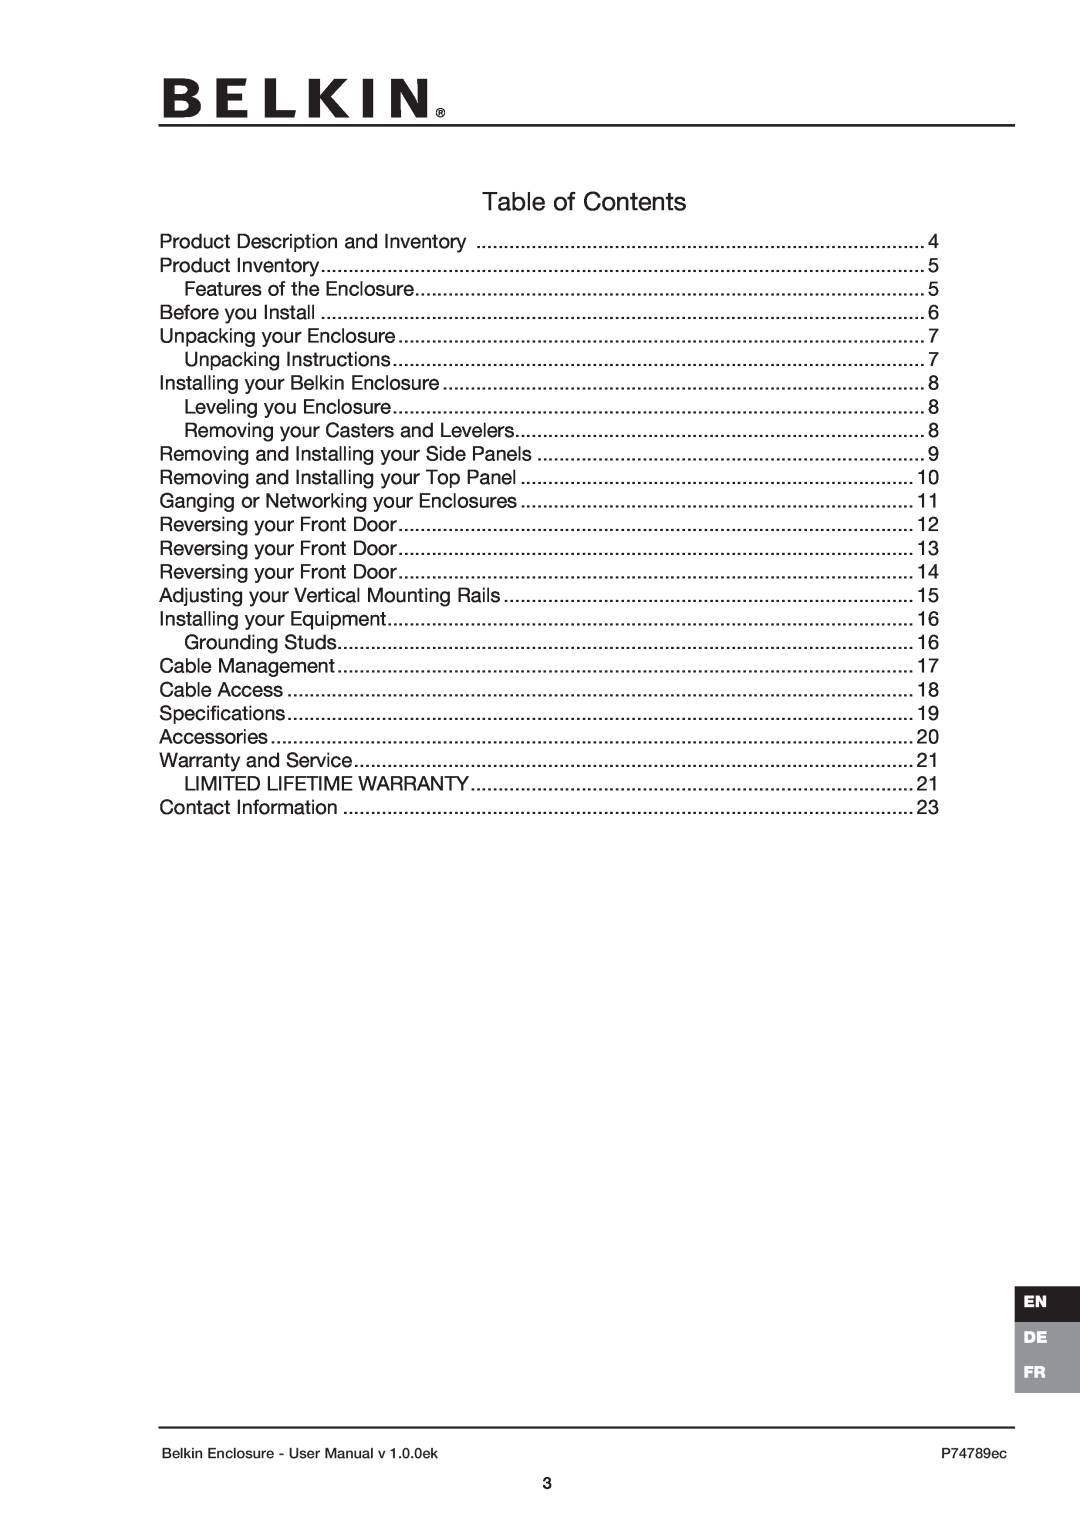 Belkin 42U user manual Table of Contents 